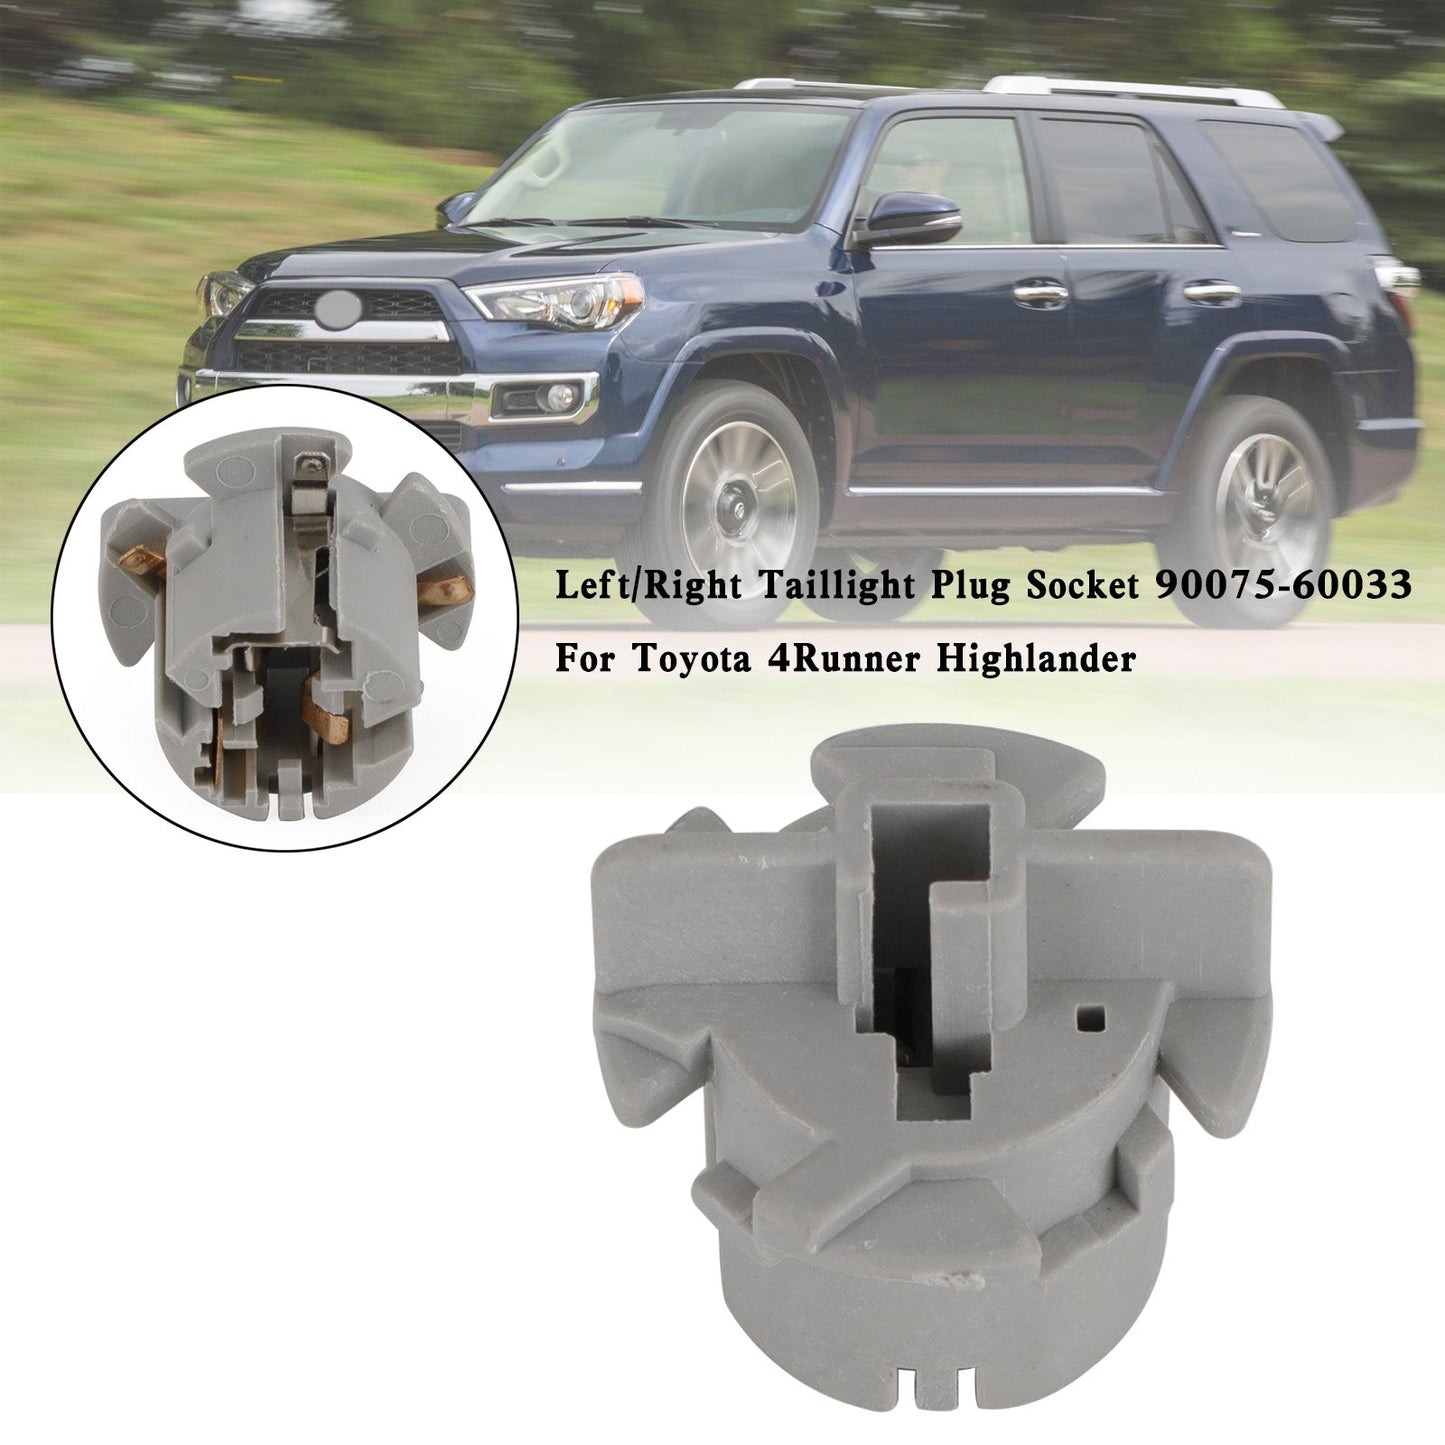 Left/Right Taillight Plug Socket 90075-60033 For Toyota 4Runner Highlander